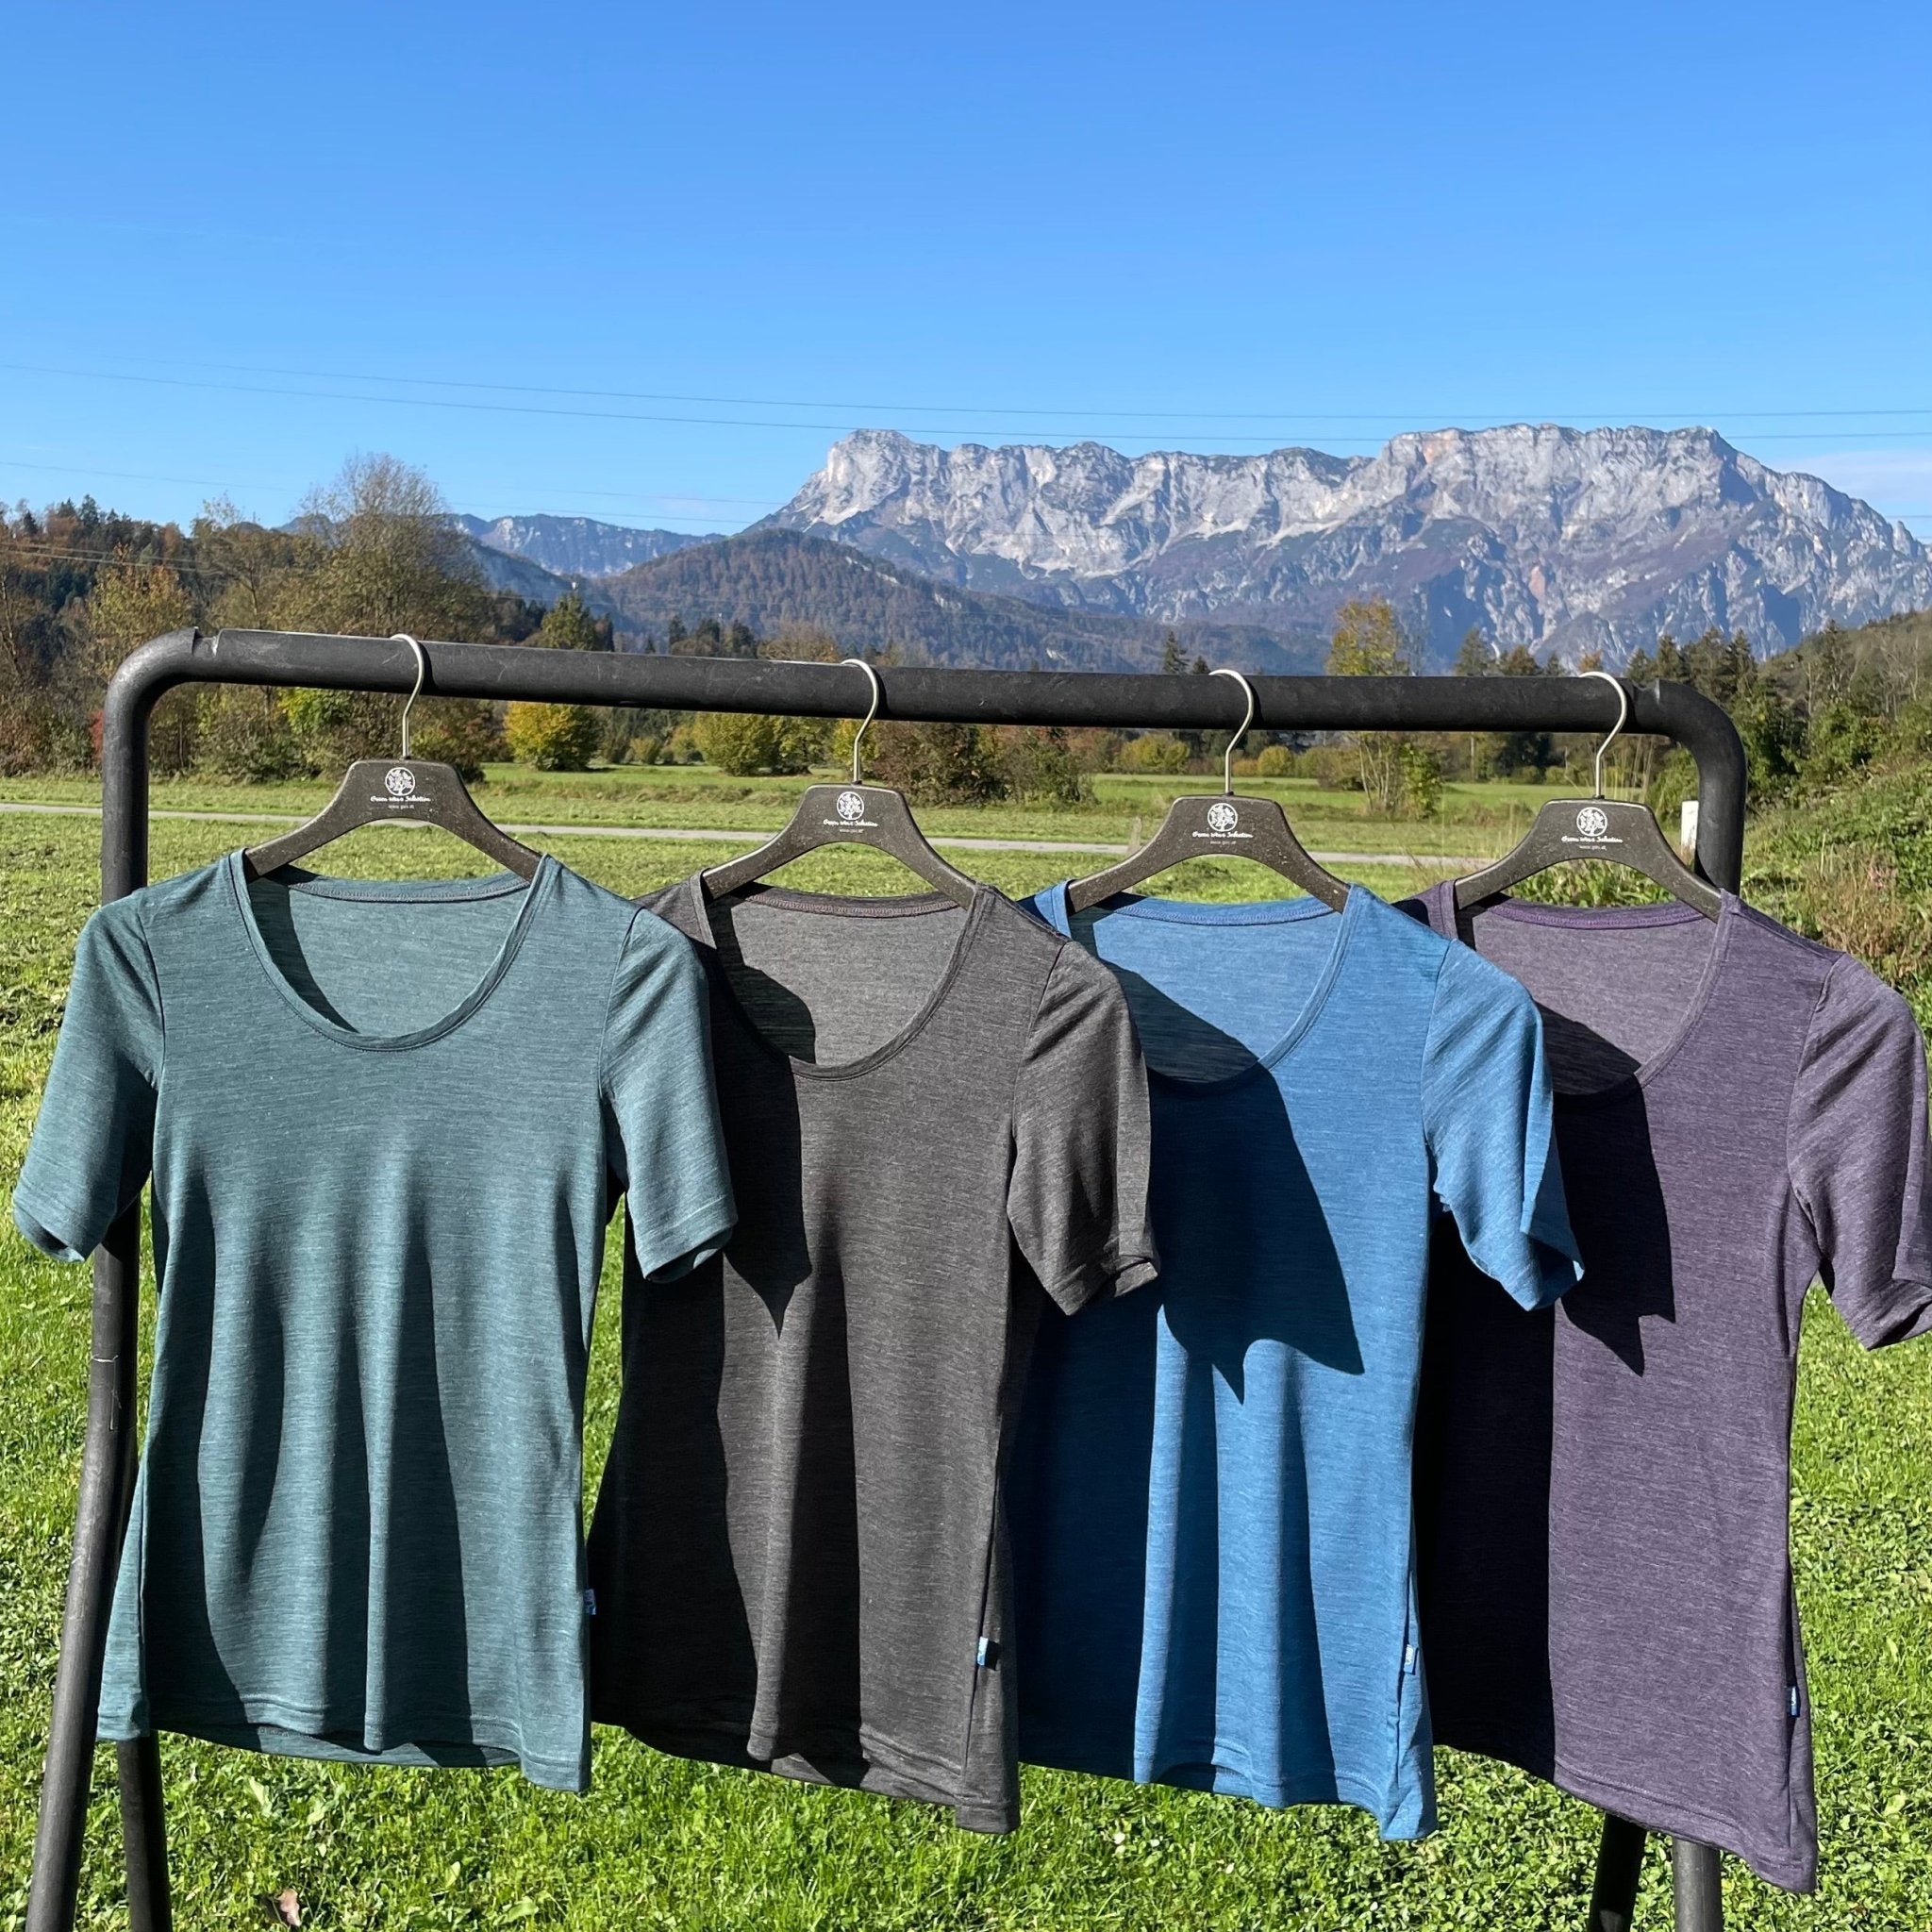 Damen T-Shirt schiefer, Merinowolle & Tencel (bio/Bluesign) - Glückskind - T-Shirt - S